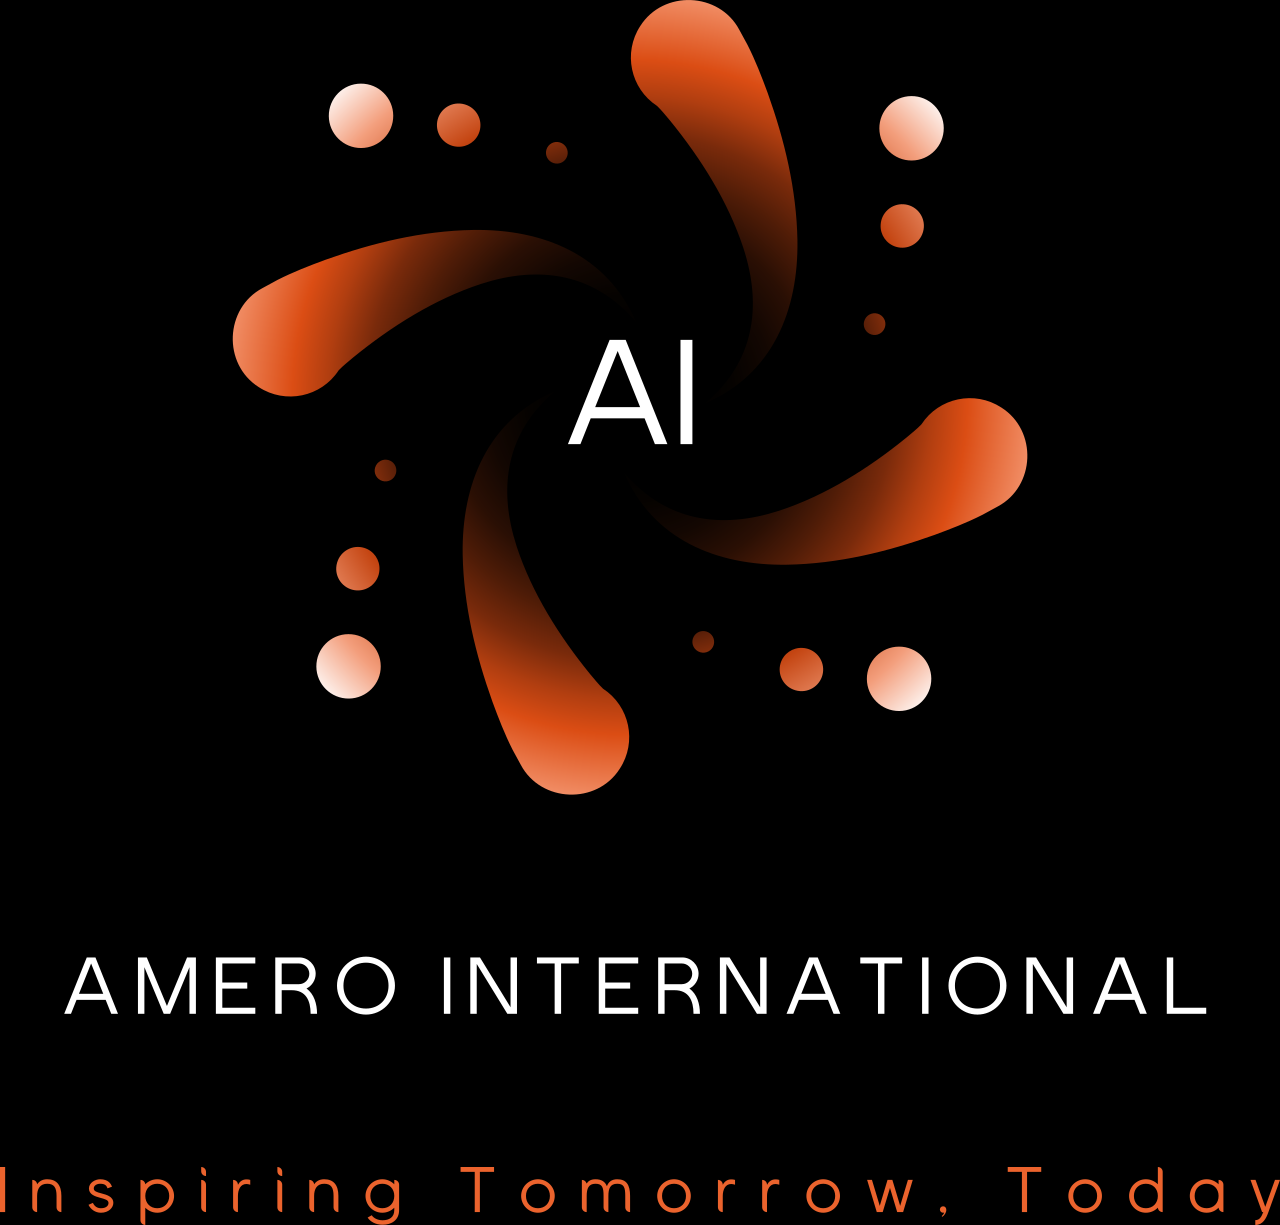 Amero International's logo